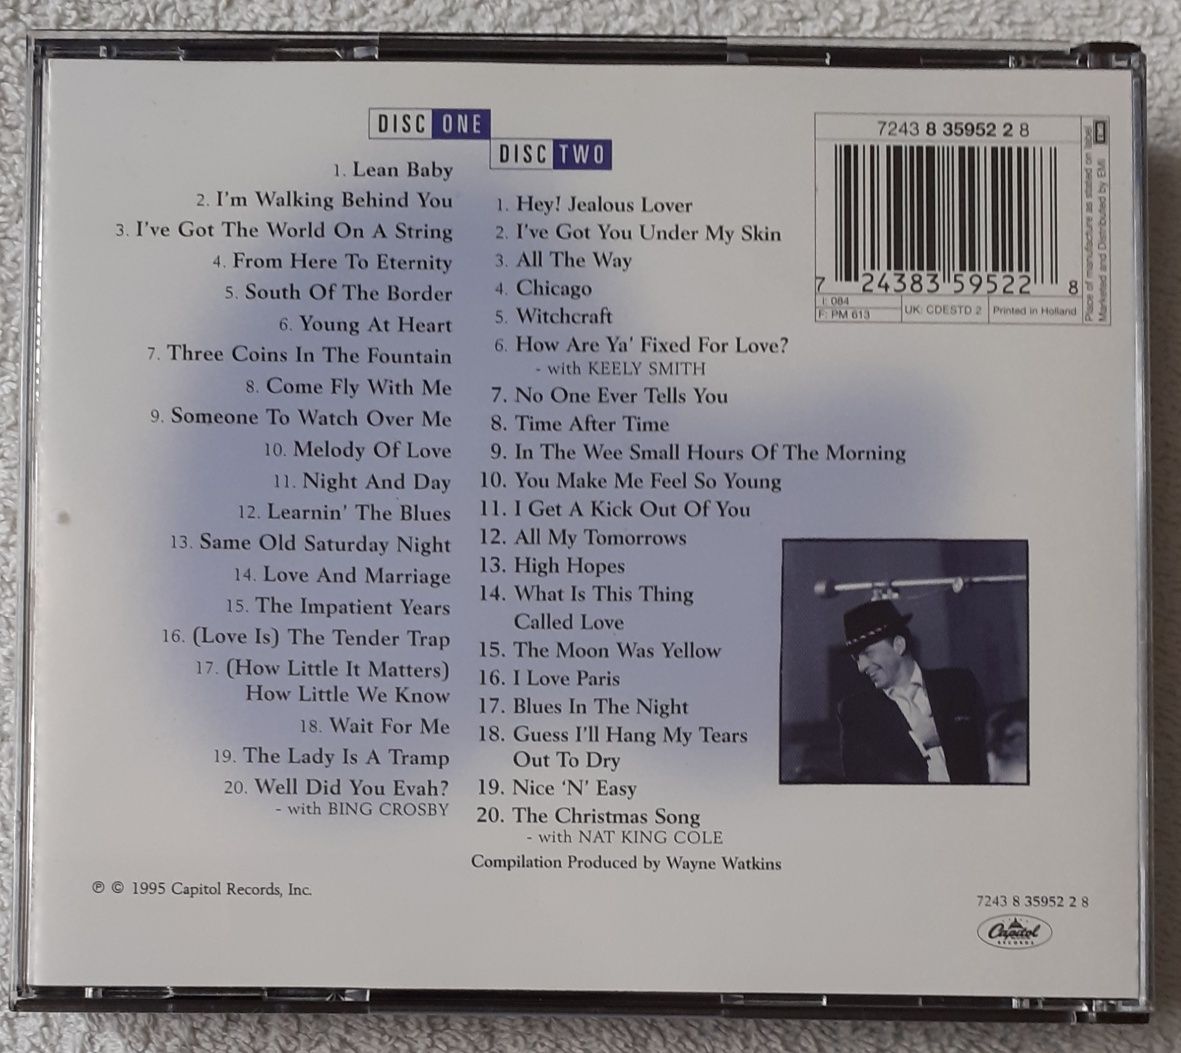 Frank Sinatra – Sinatra 80th All The Best (2CD, Compilation + Gratis)